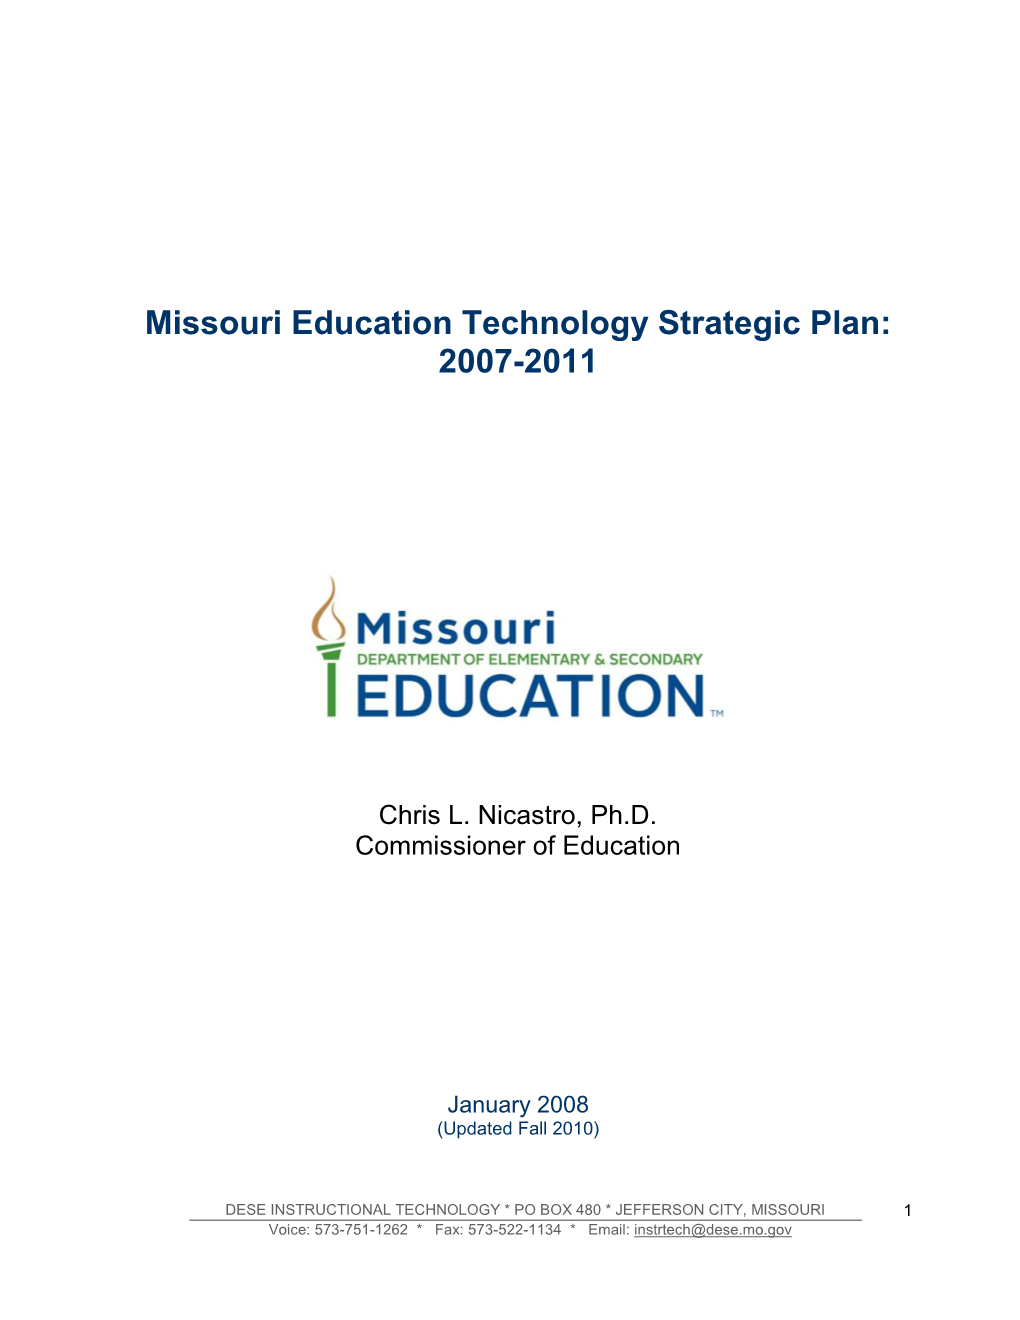 Missouri Education Technology Strategic Plan: 2007-2011